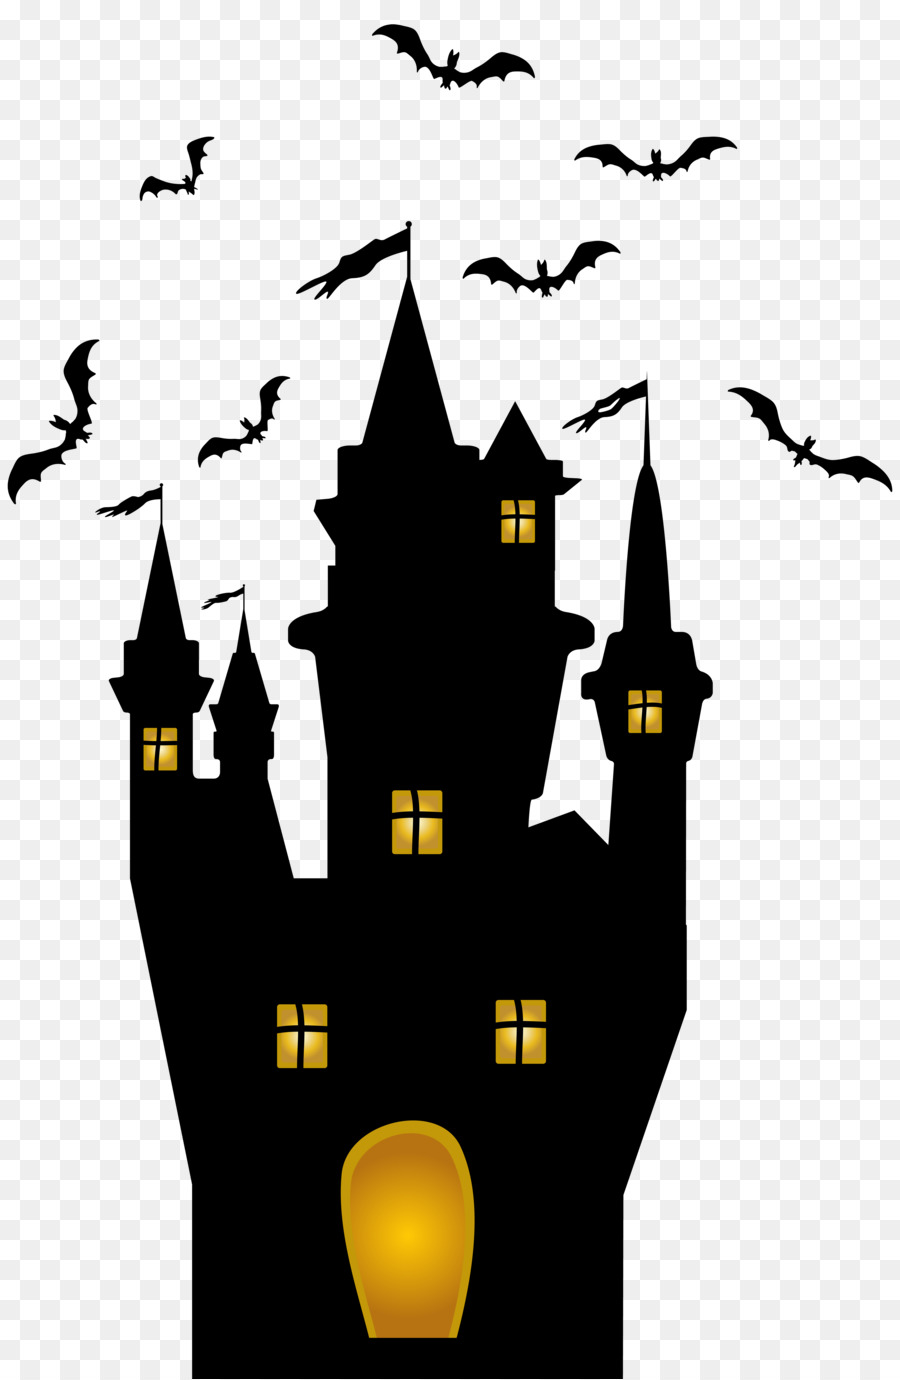 Bran Castle Halloween Haunted house Clip art - Castle png download - 4567*7000 - Free Transparent Bran Castle png Download.